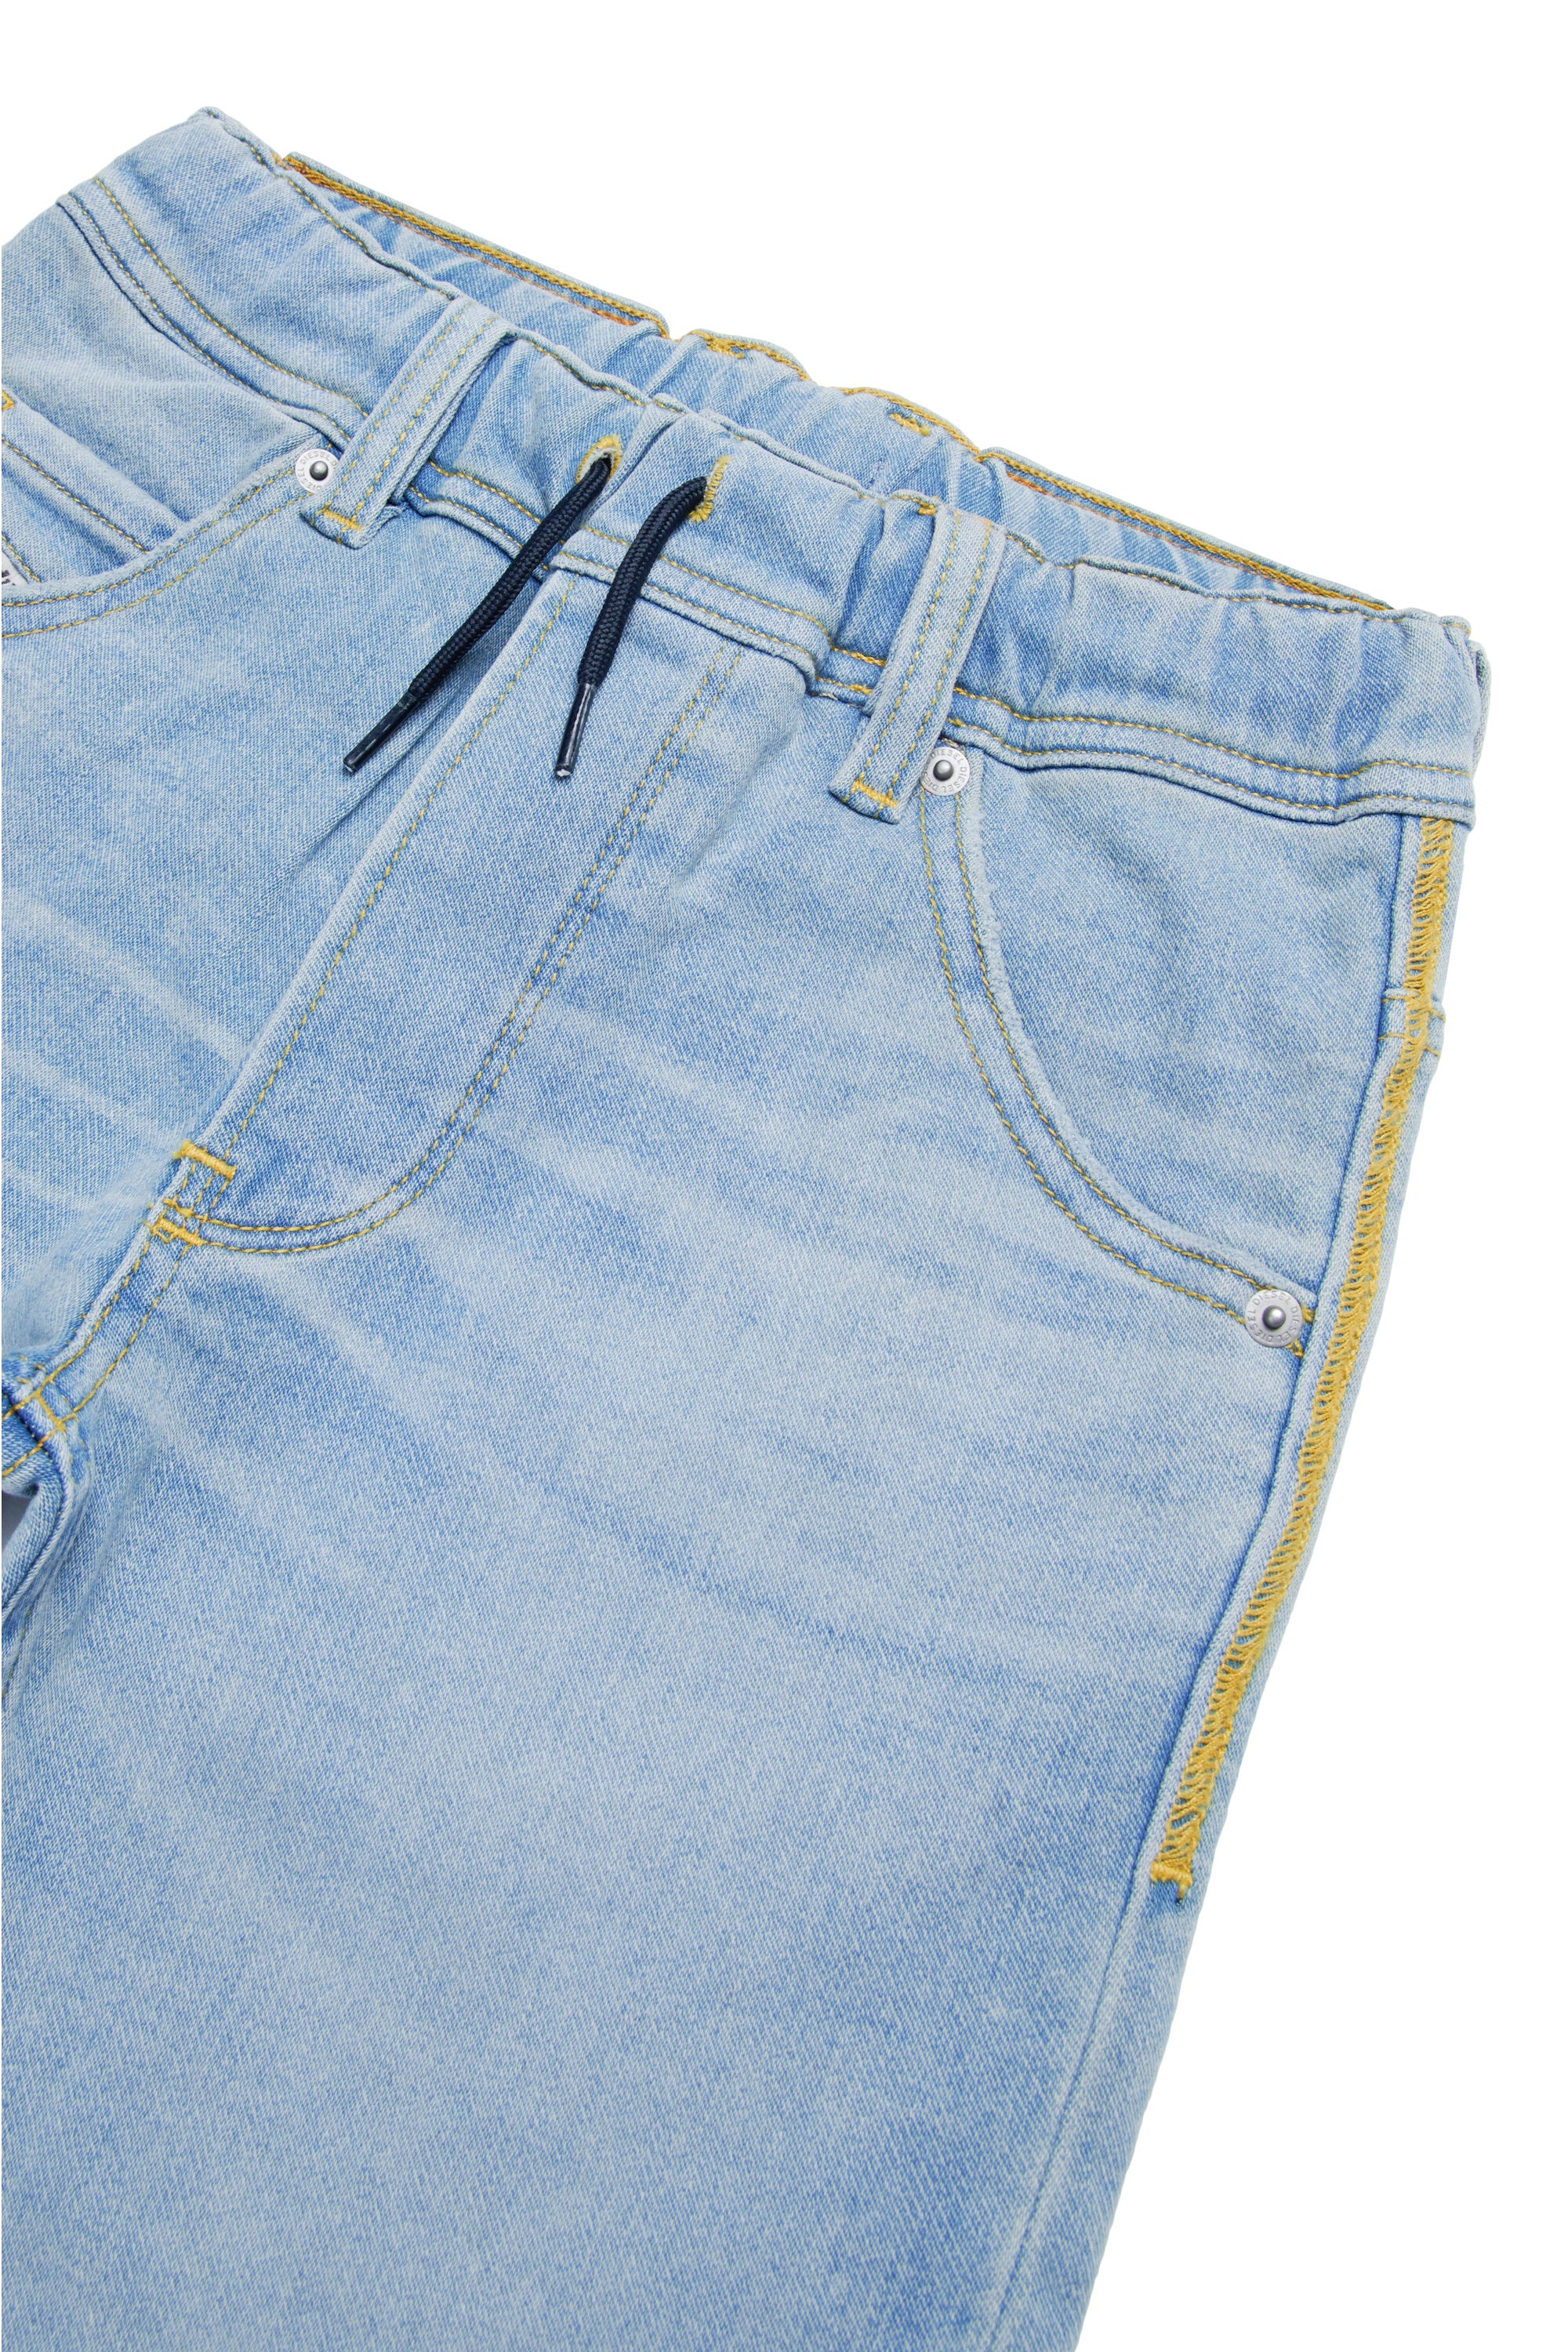 Pantalones cortos JoggJeans® en tono claro